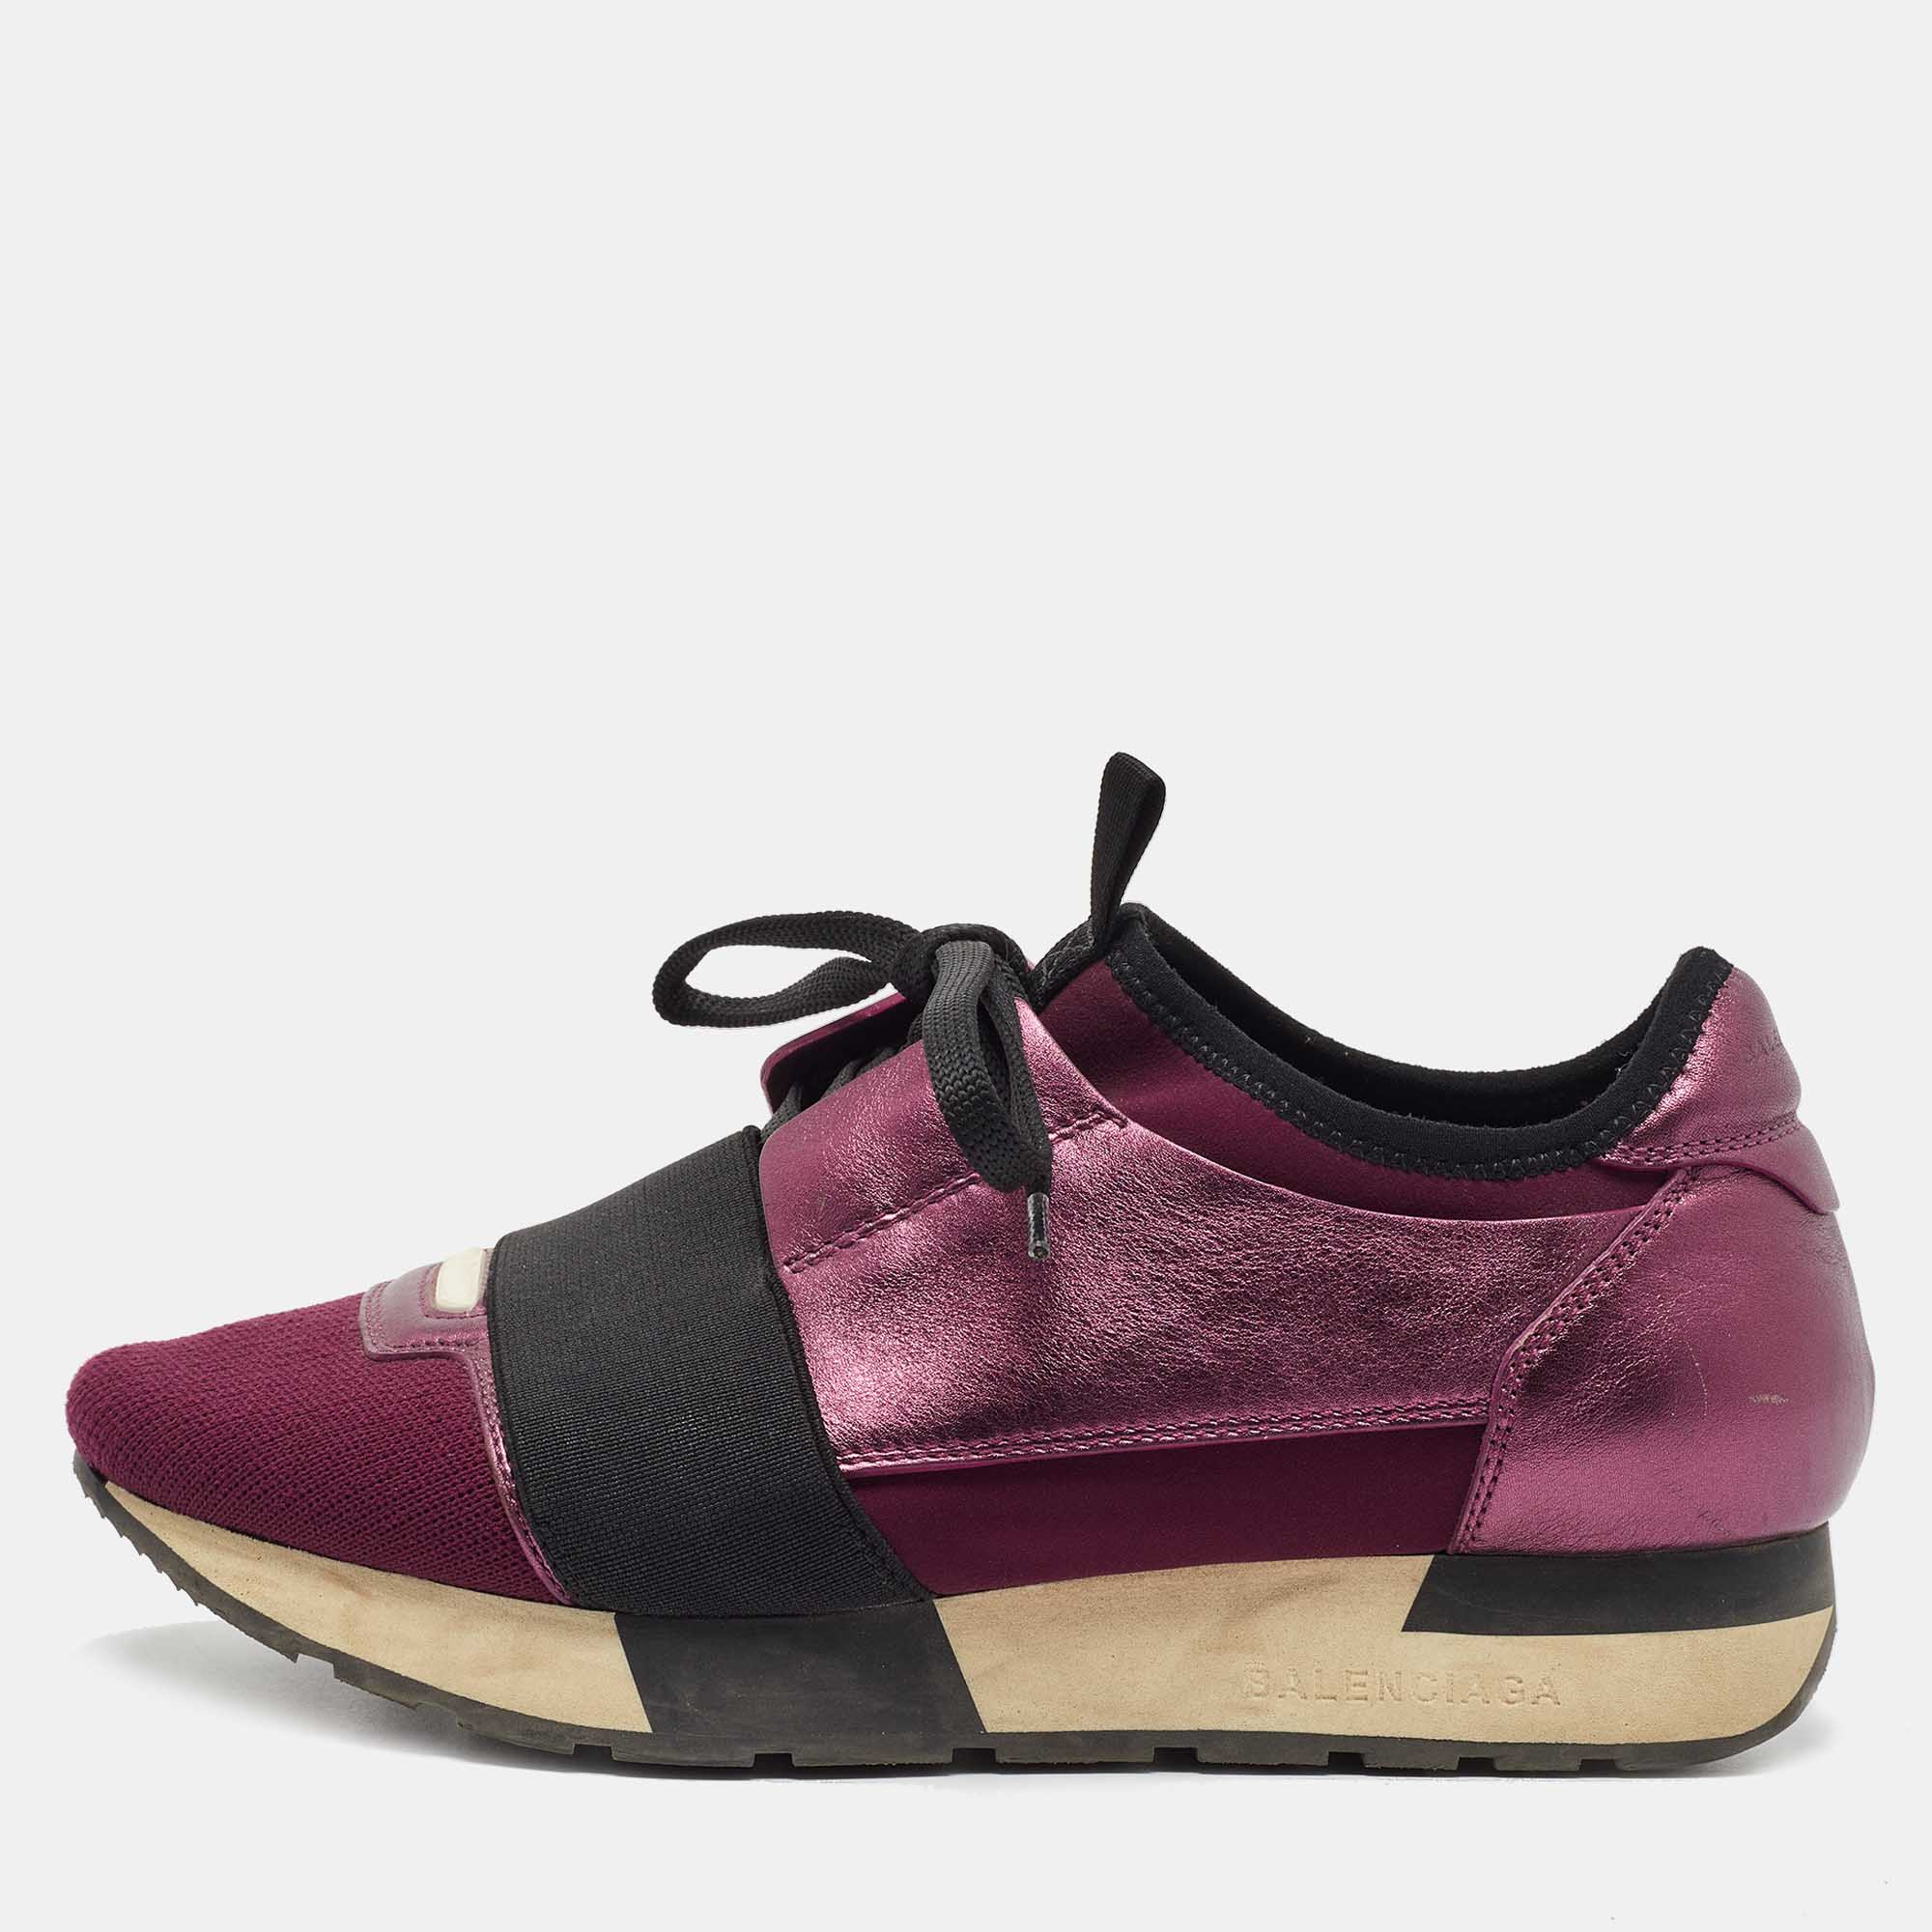 Balenciaga banciaga purple/black leather and fabric race runner sneakers size 36